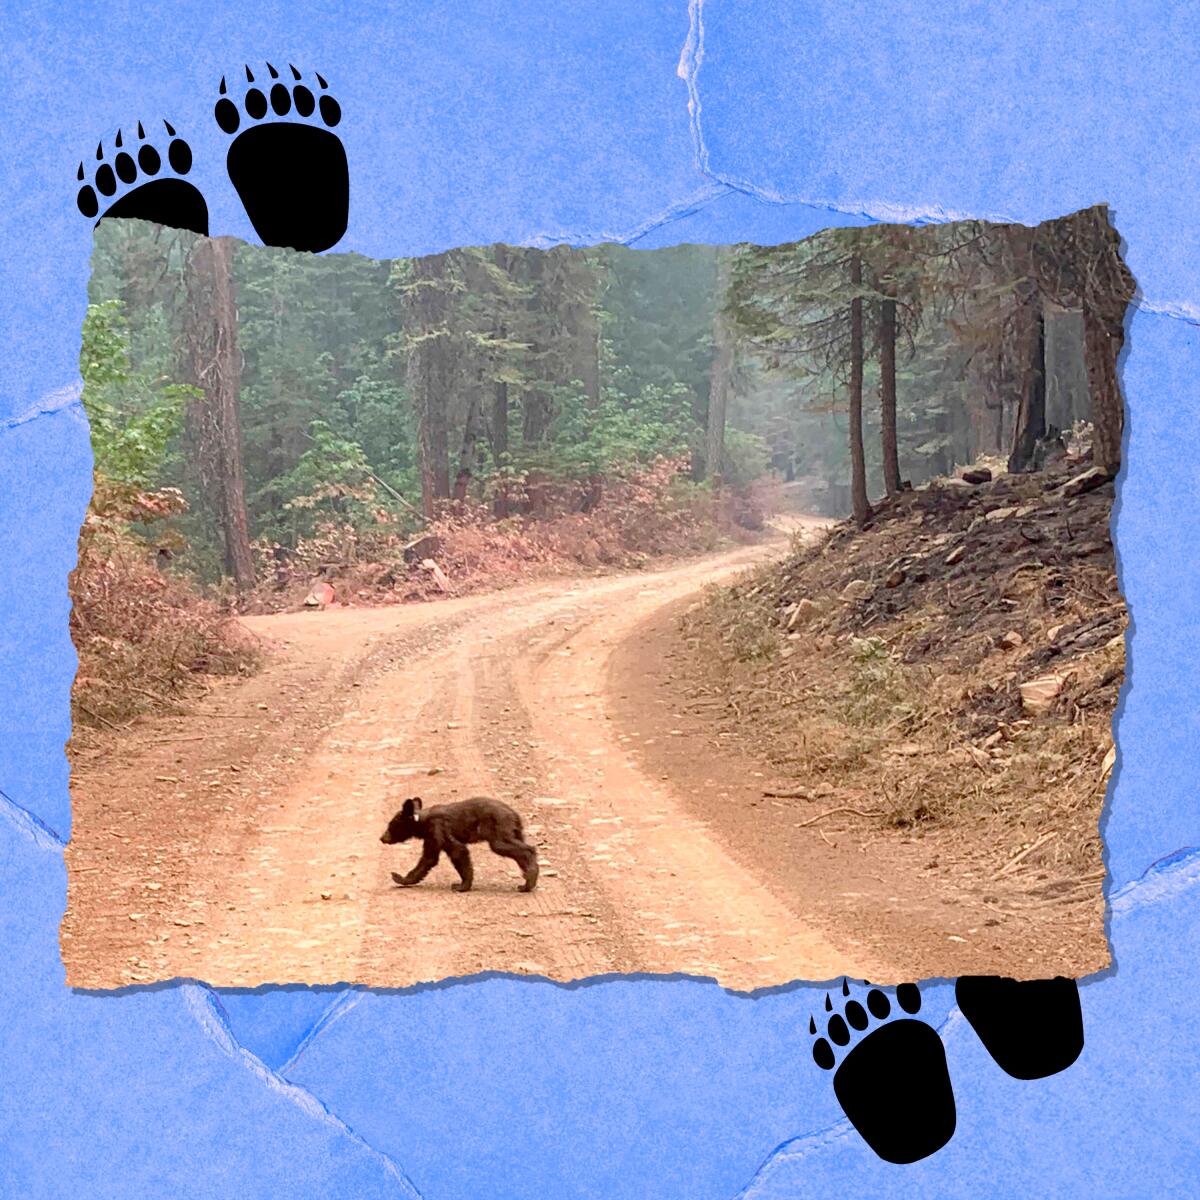 A bear cub walks alone across a trail.